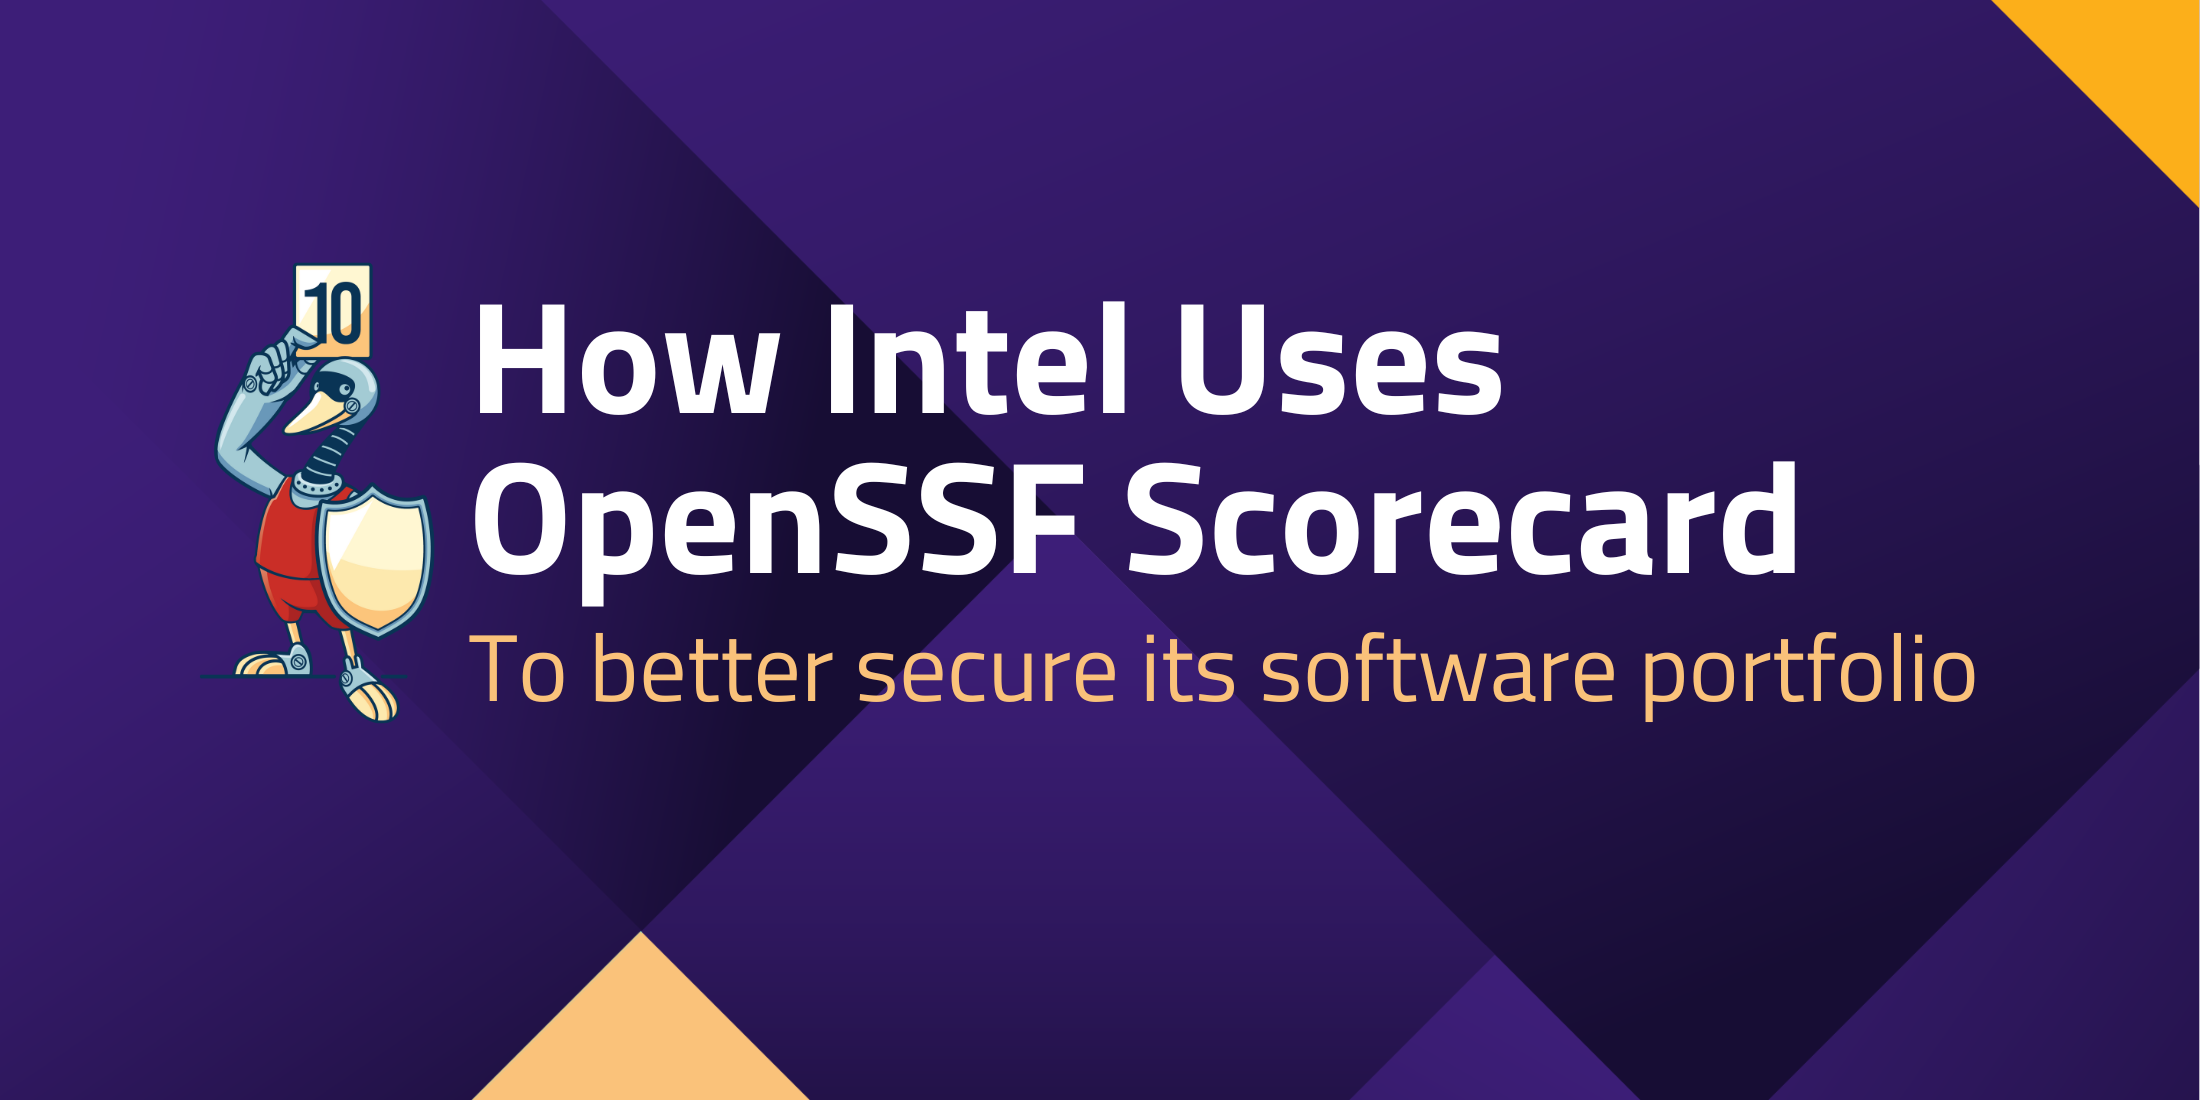 Intel OpenSSF Scorecard Secure Sofware Portfolio